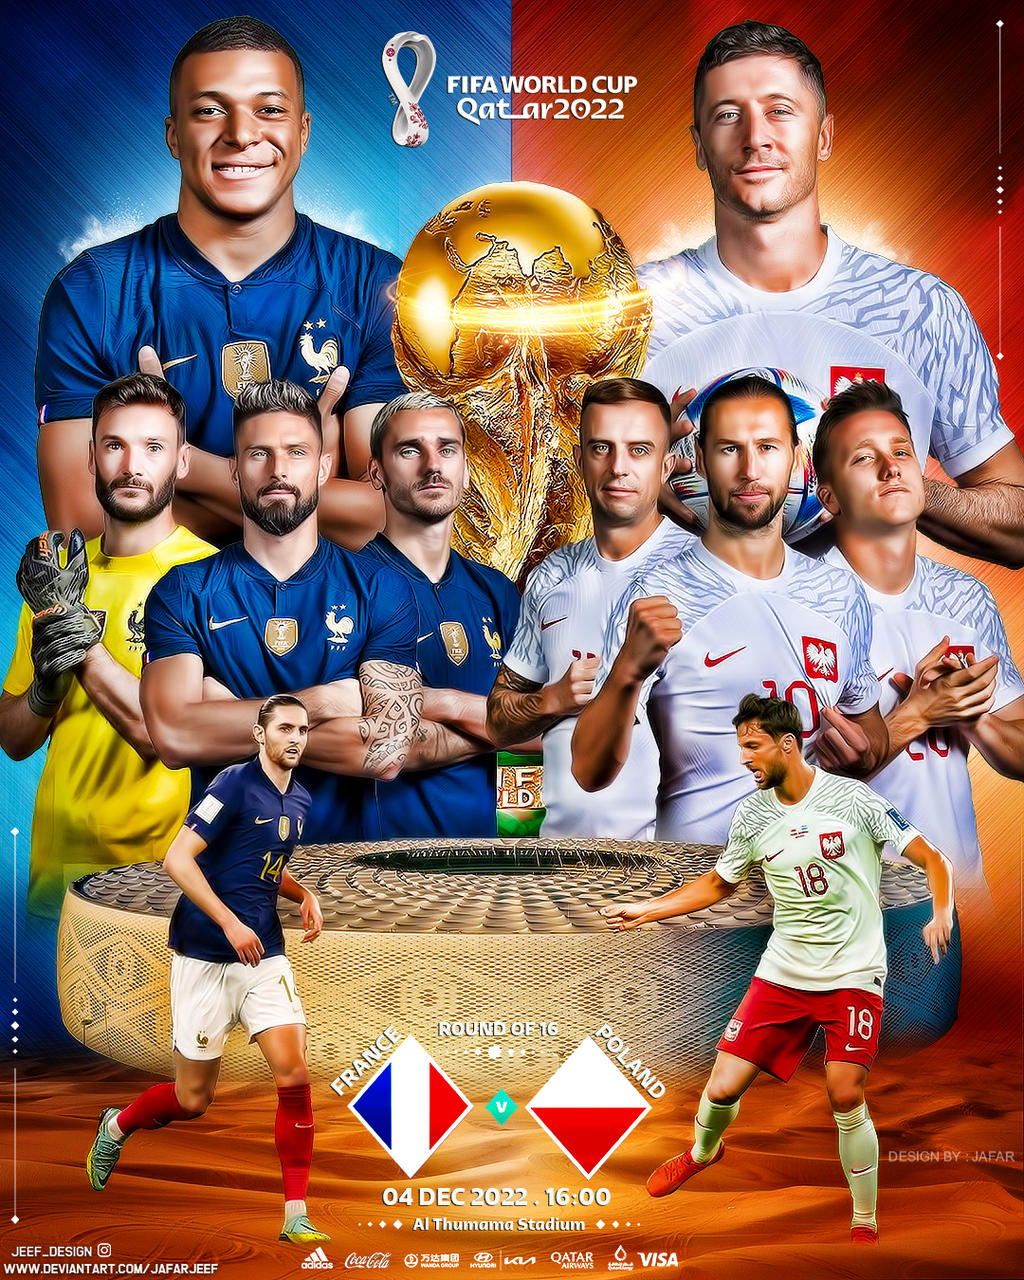 FIFA WORLD CUP QATAR 2022 by jafarjeef on DeviantArt